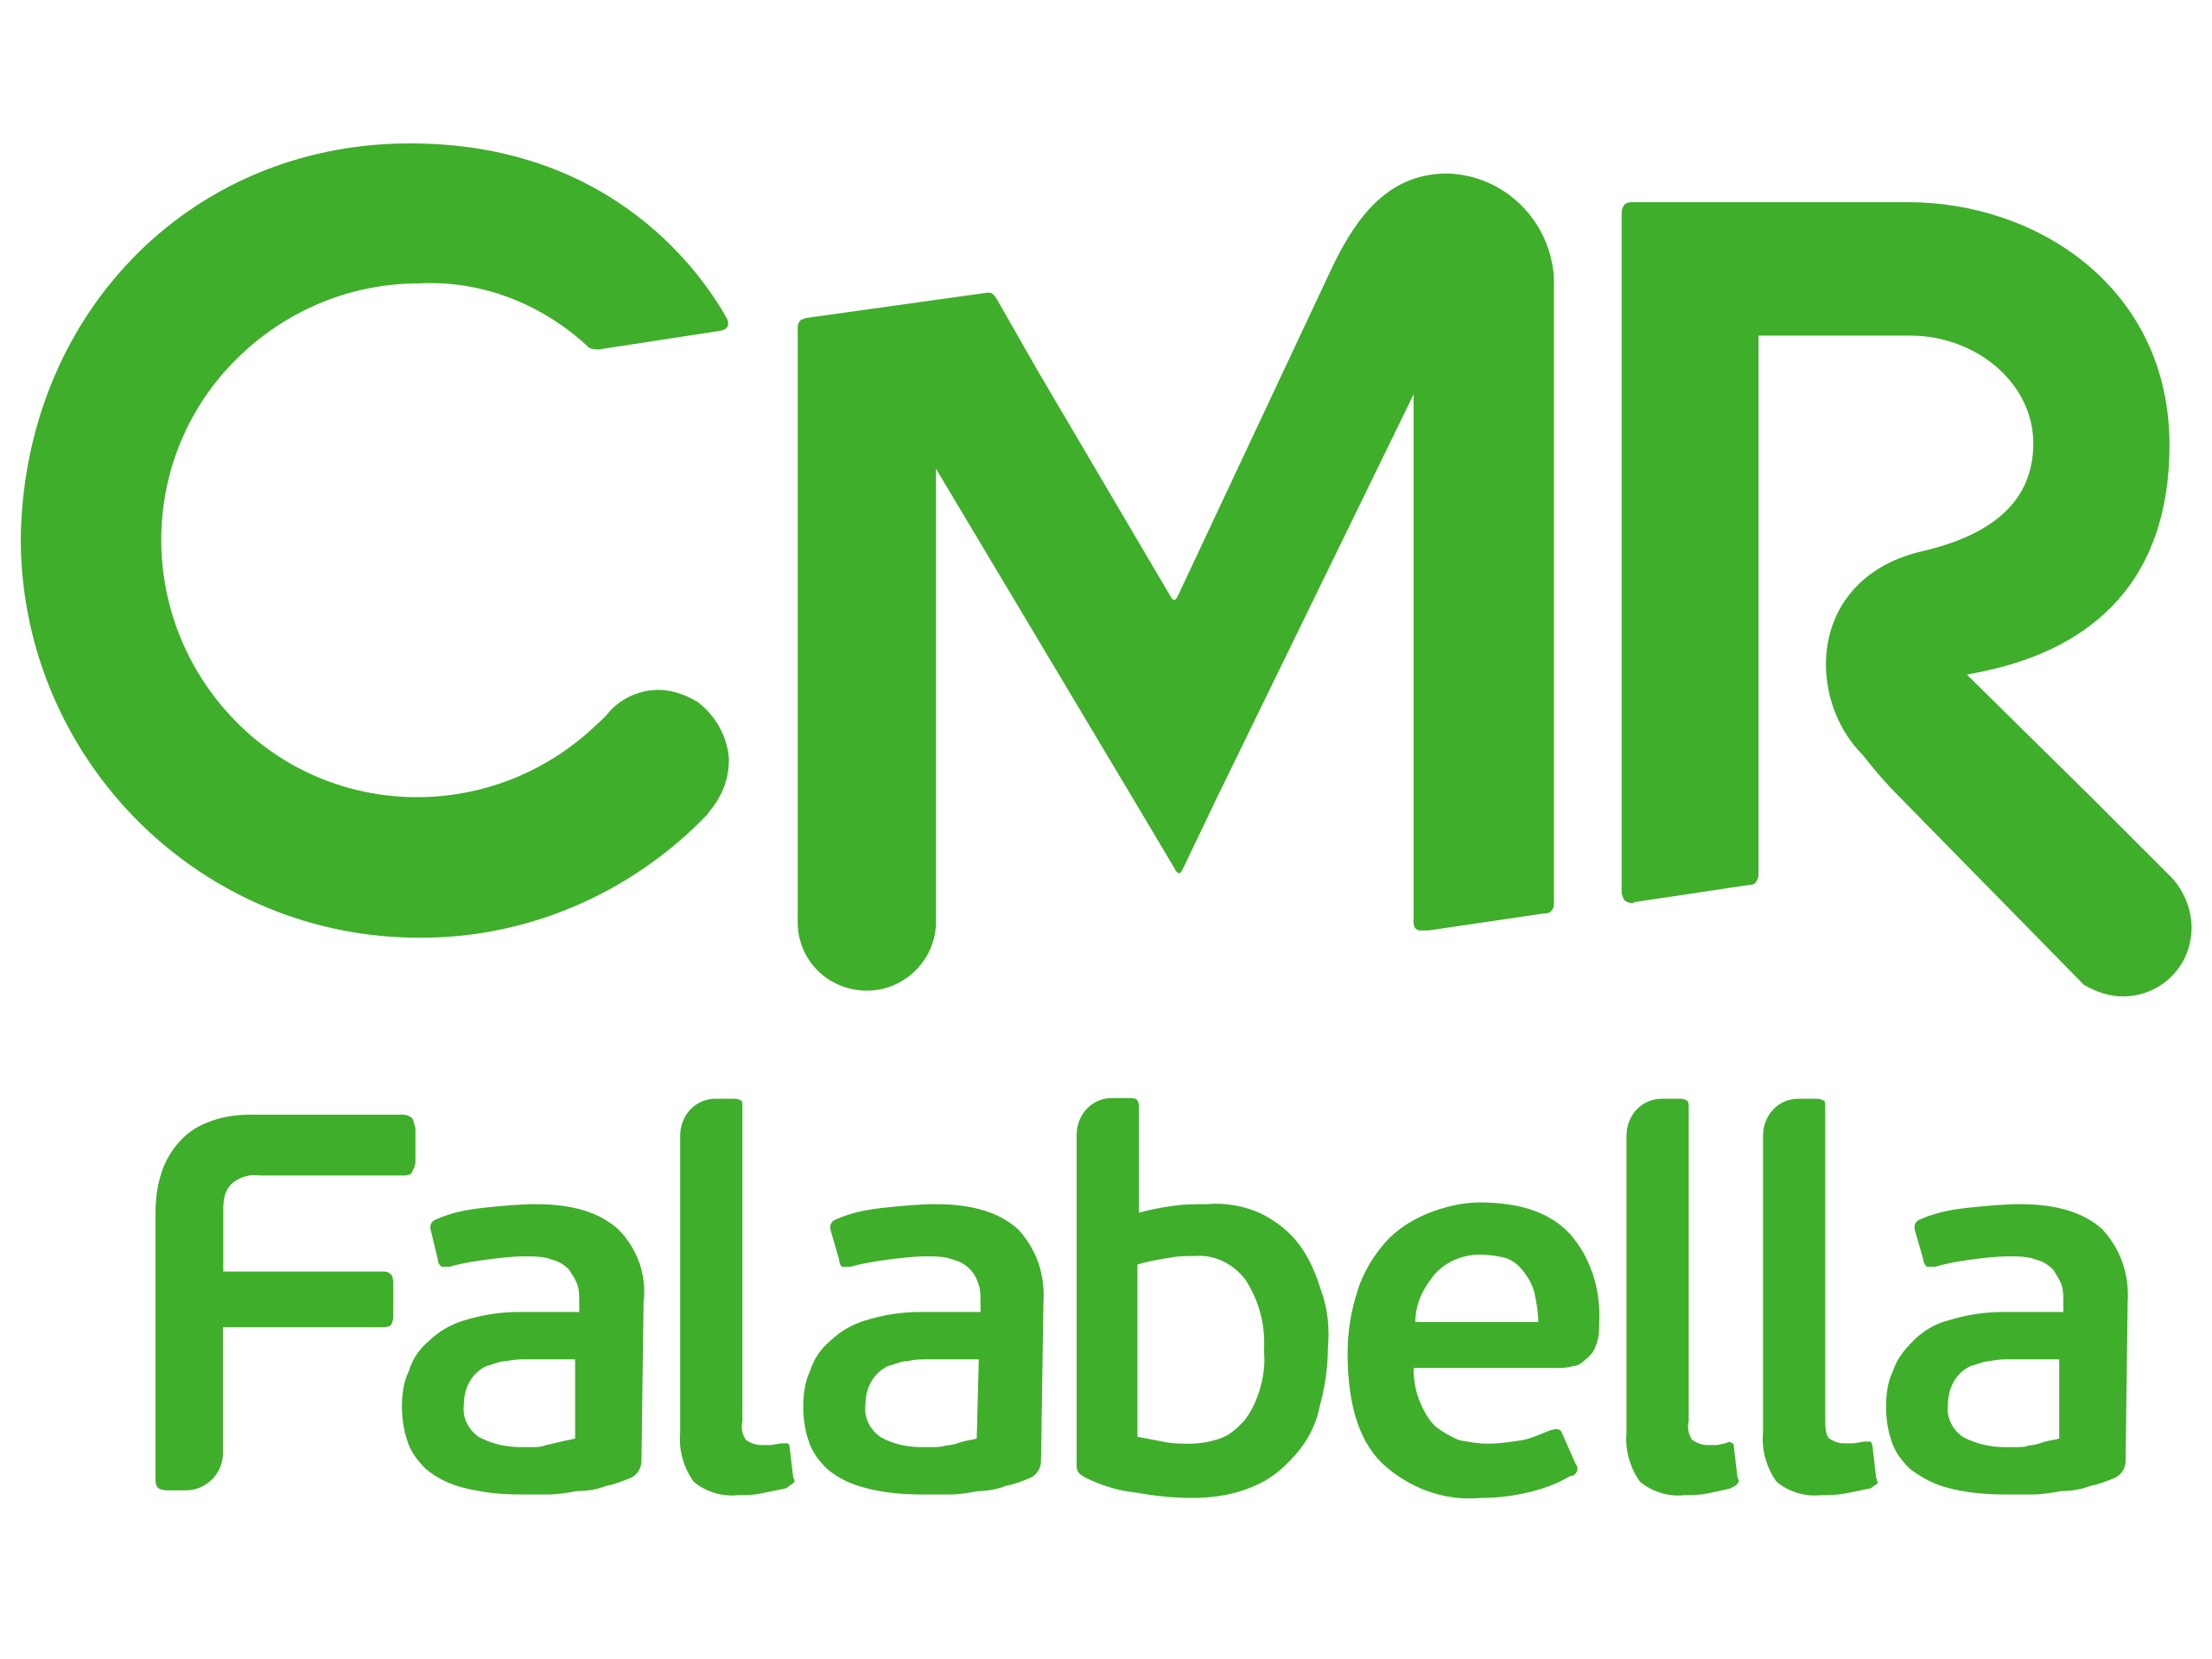 2560px-CMR_Falabella-Logo.svg